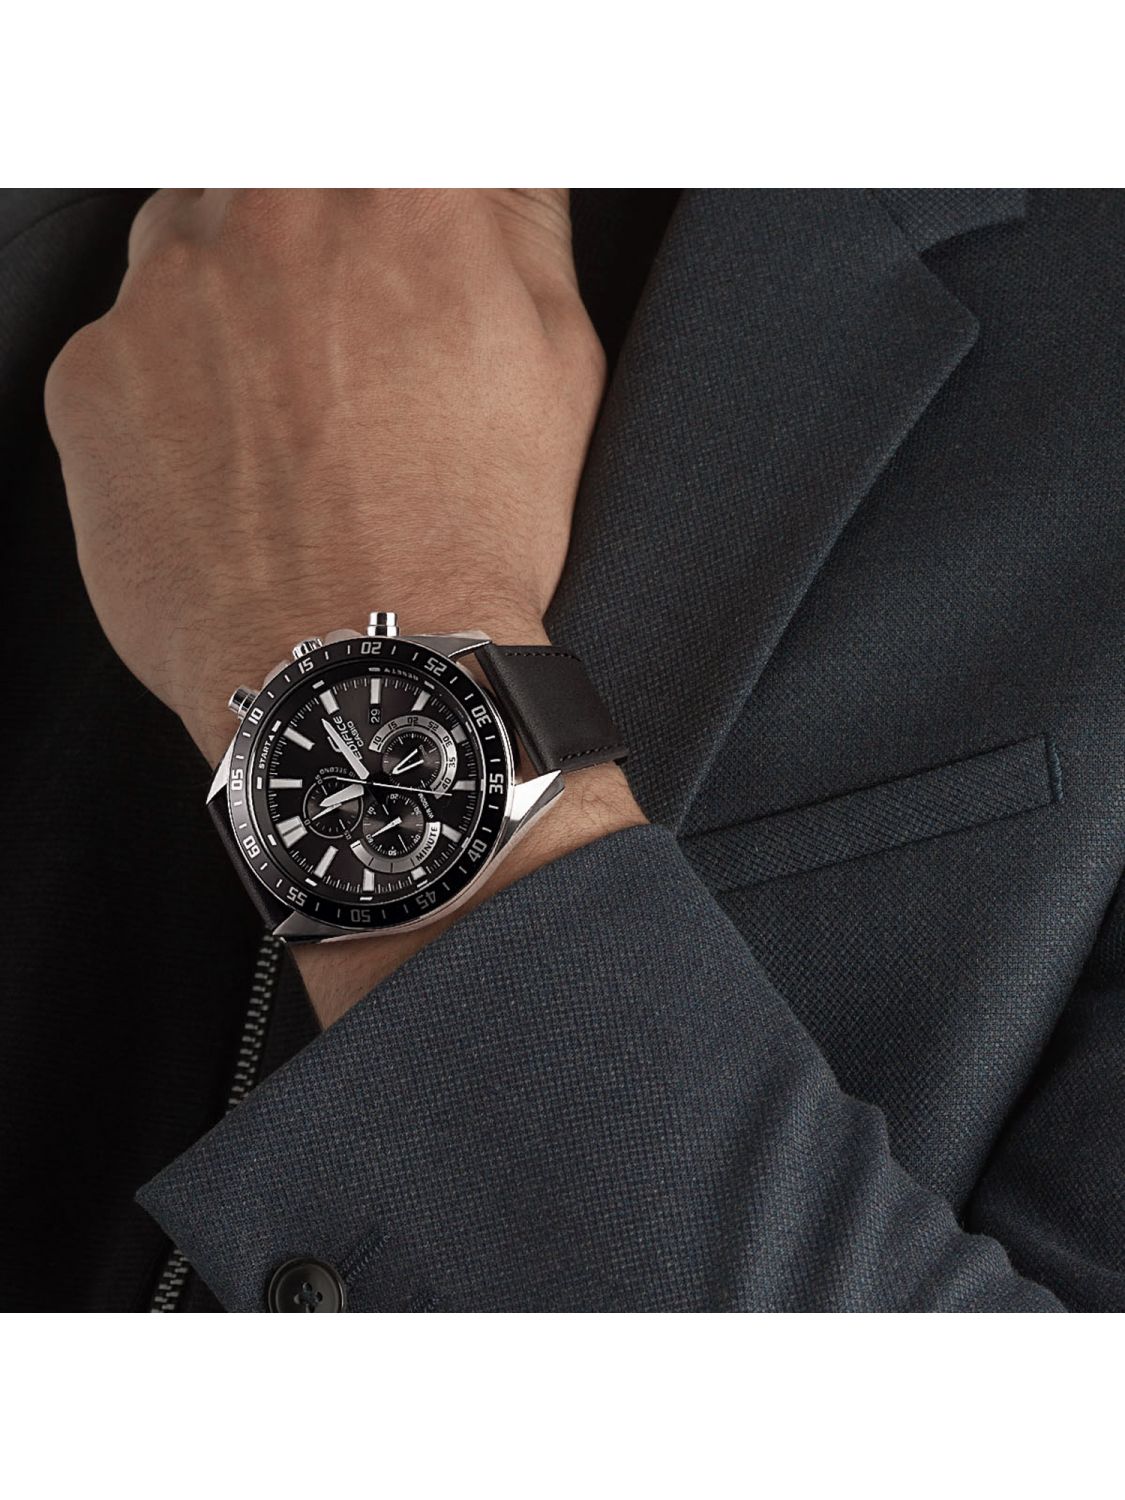 Casio Edifice Men's Watch Chronograph Black EFV-620L-1AVUEF • uhrcenter